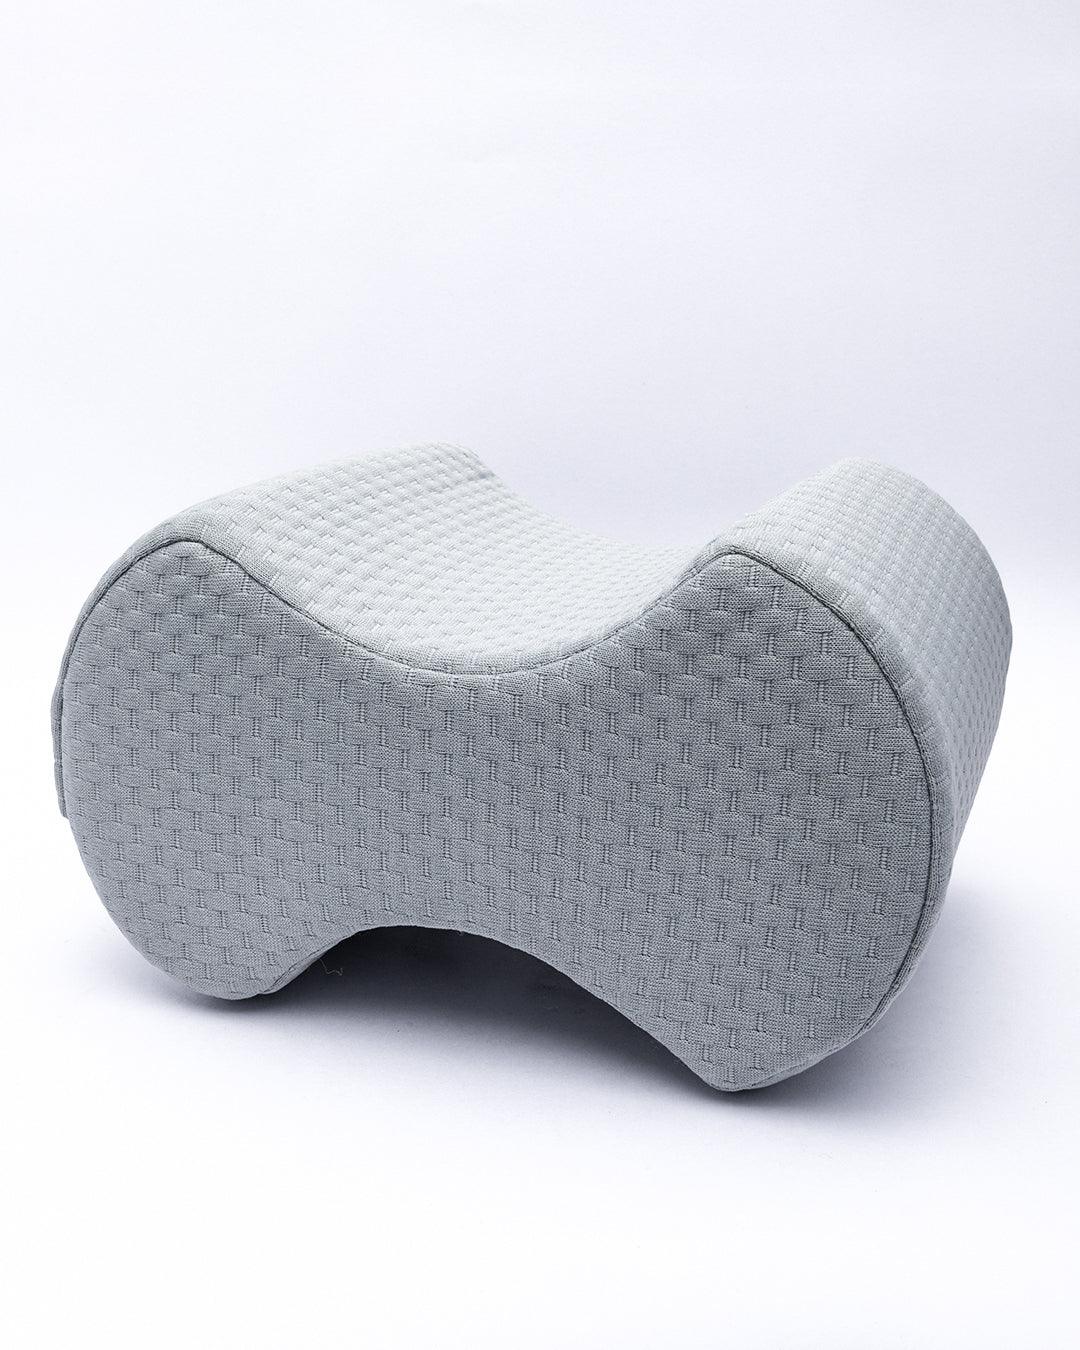 Donati Orthopaedic Knee Pillow - Support & Comfort Pillow - MARKET 99